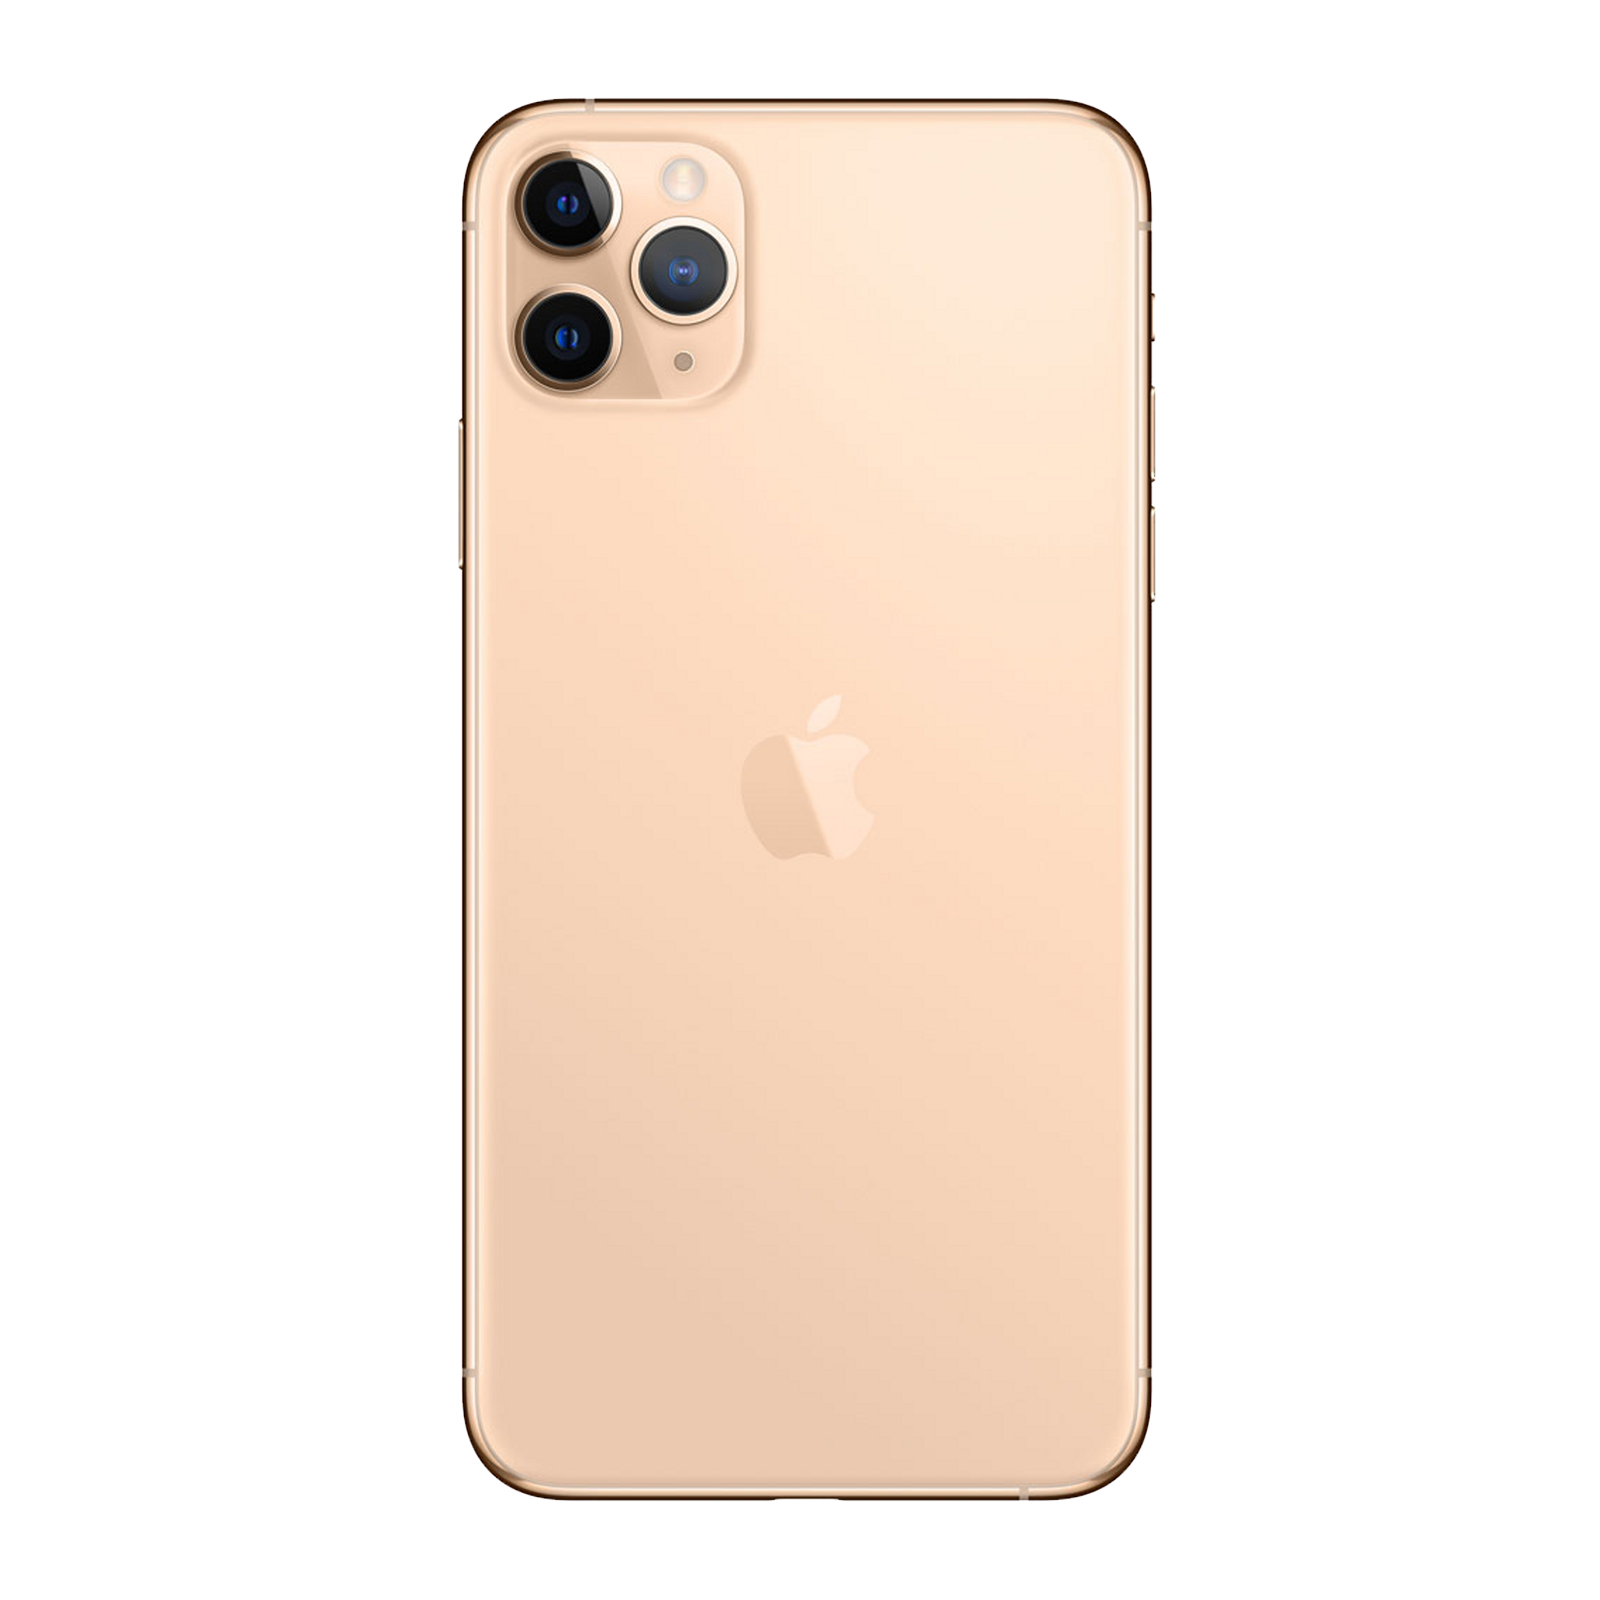 Apple iPhone 11 Pro Max 256GB Gold Fair - Sprint